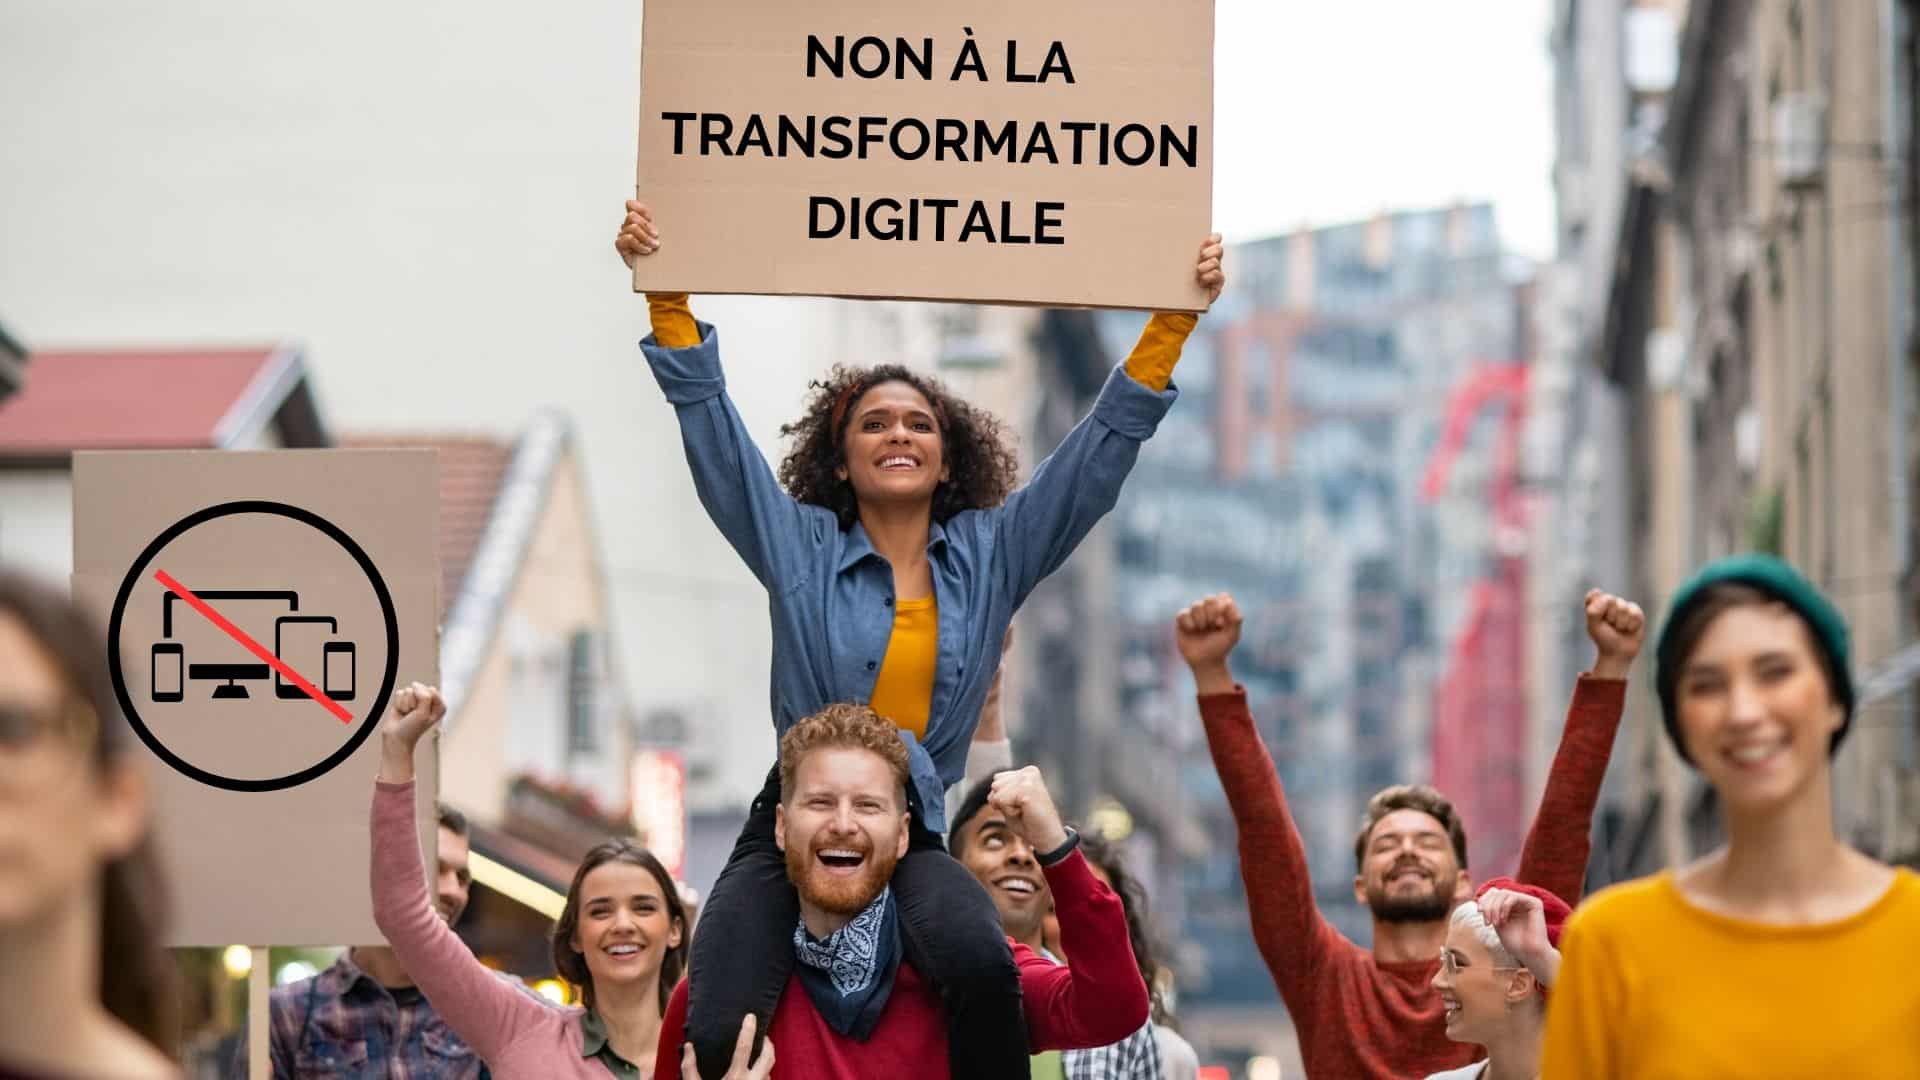 Tranformation digitale refus